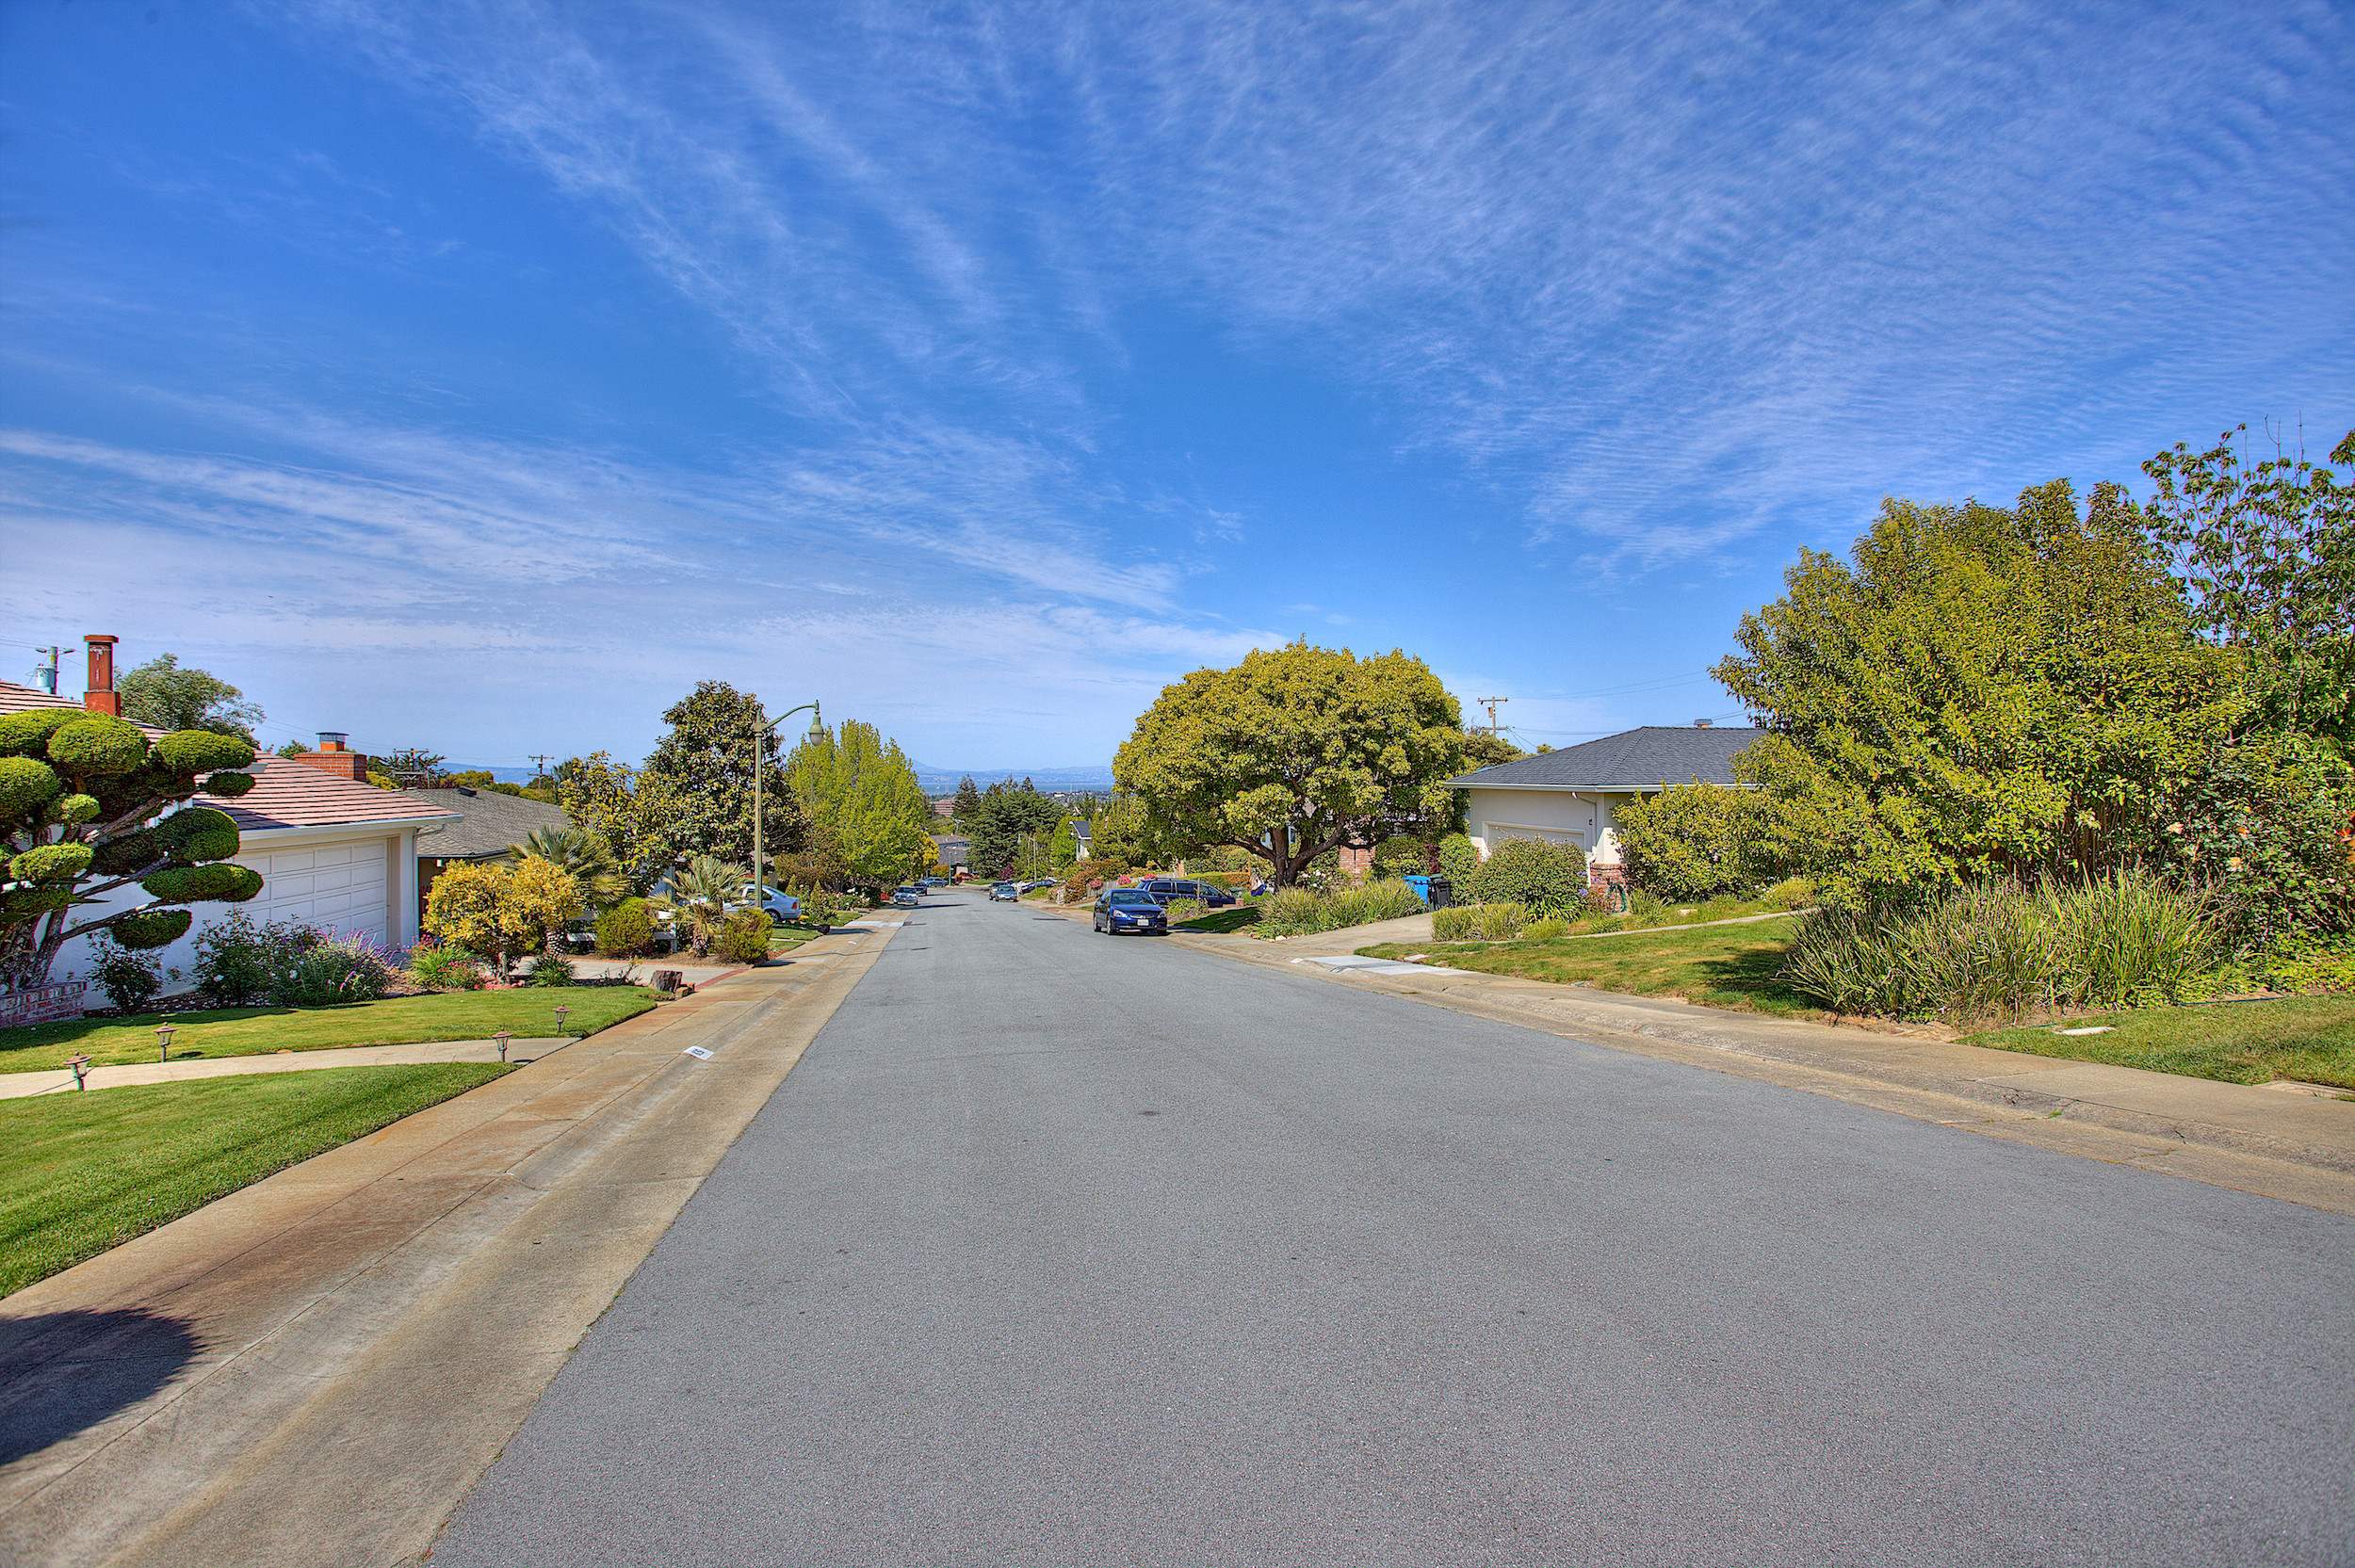 Asphalt neighborhood road in San Mateo.